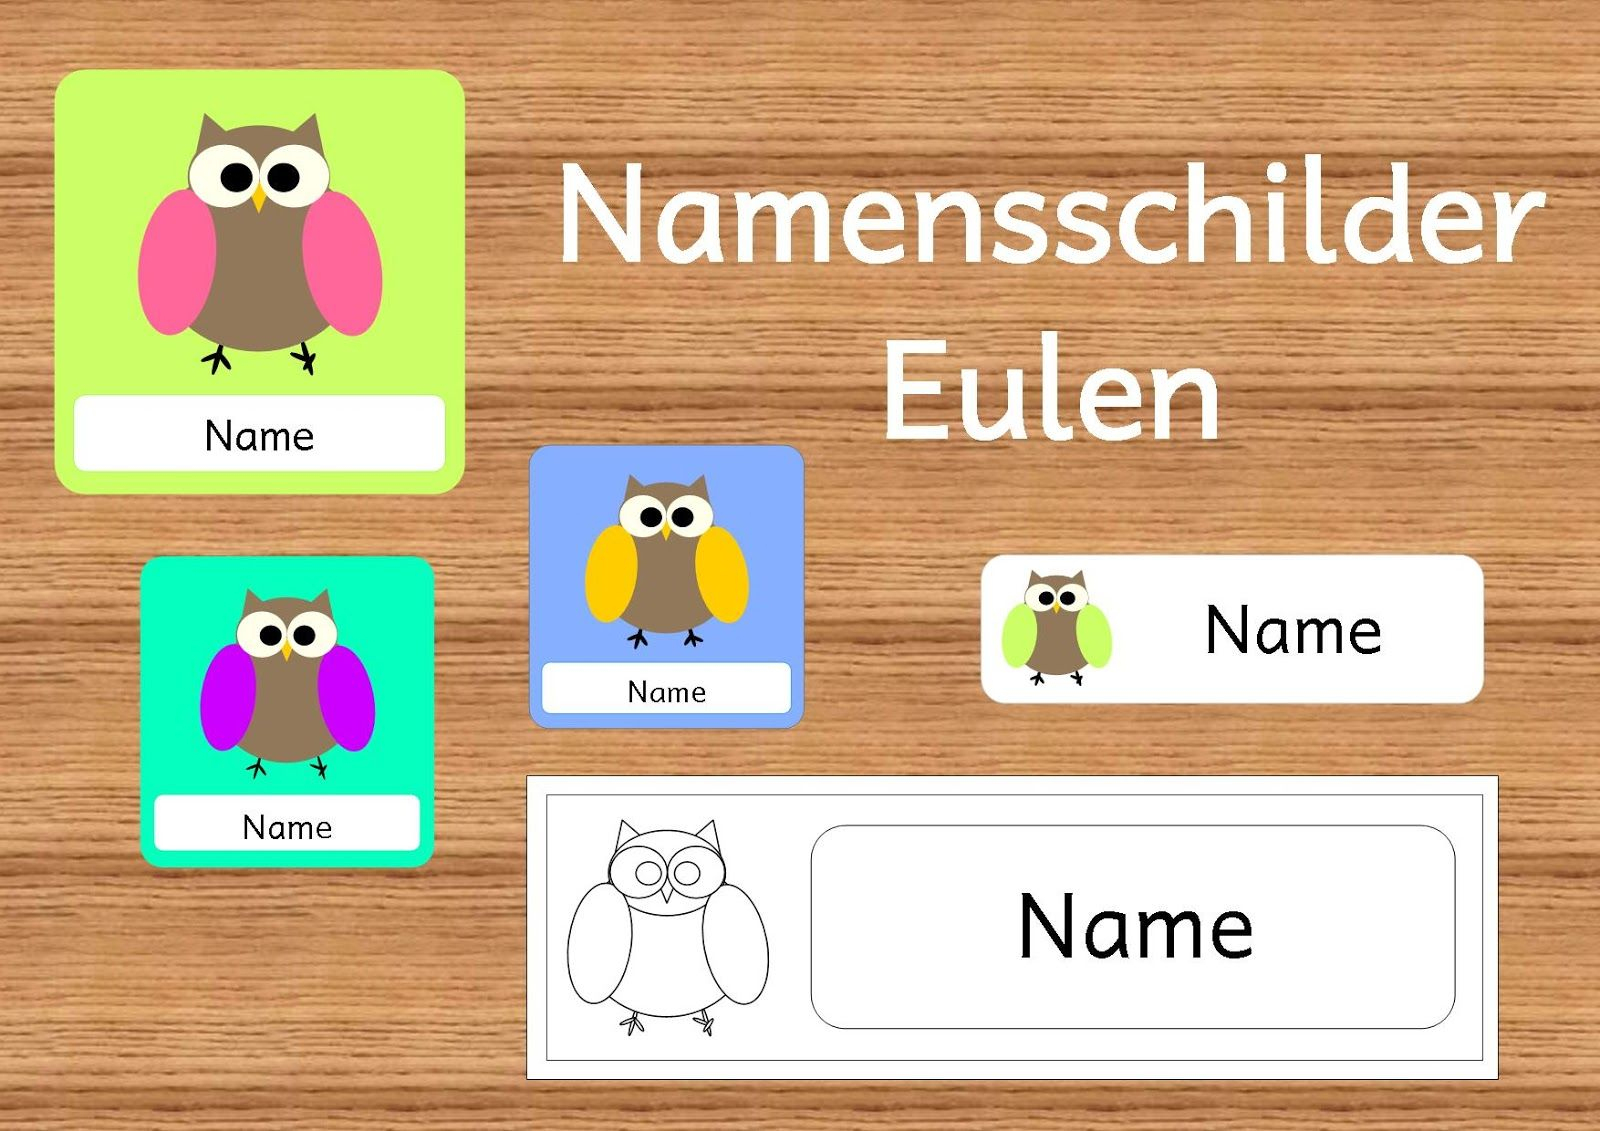 Namensschilder Eulen | Namensschilder, Grundschulklasse mit Namensschilder Grundschule Vorlagen